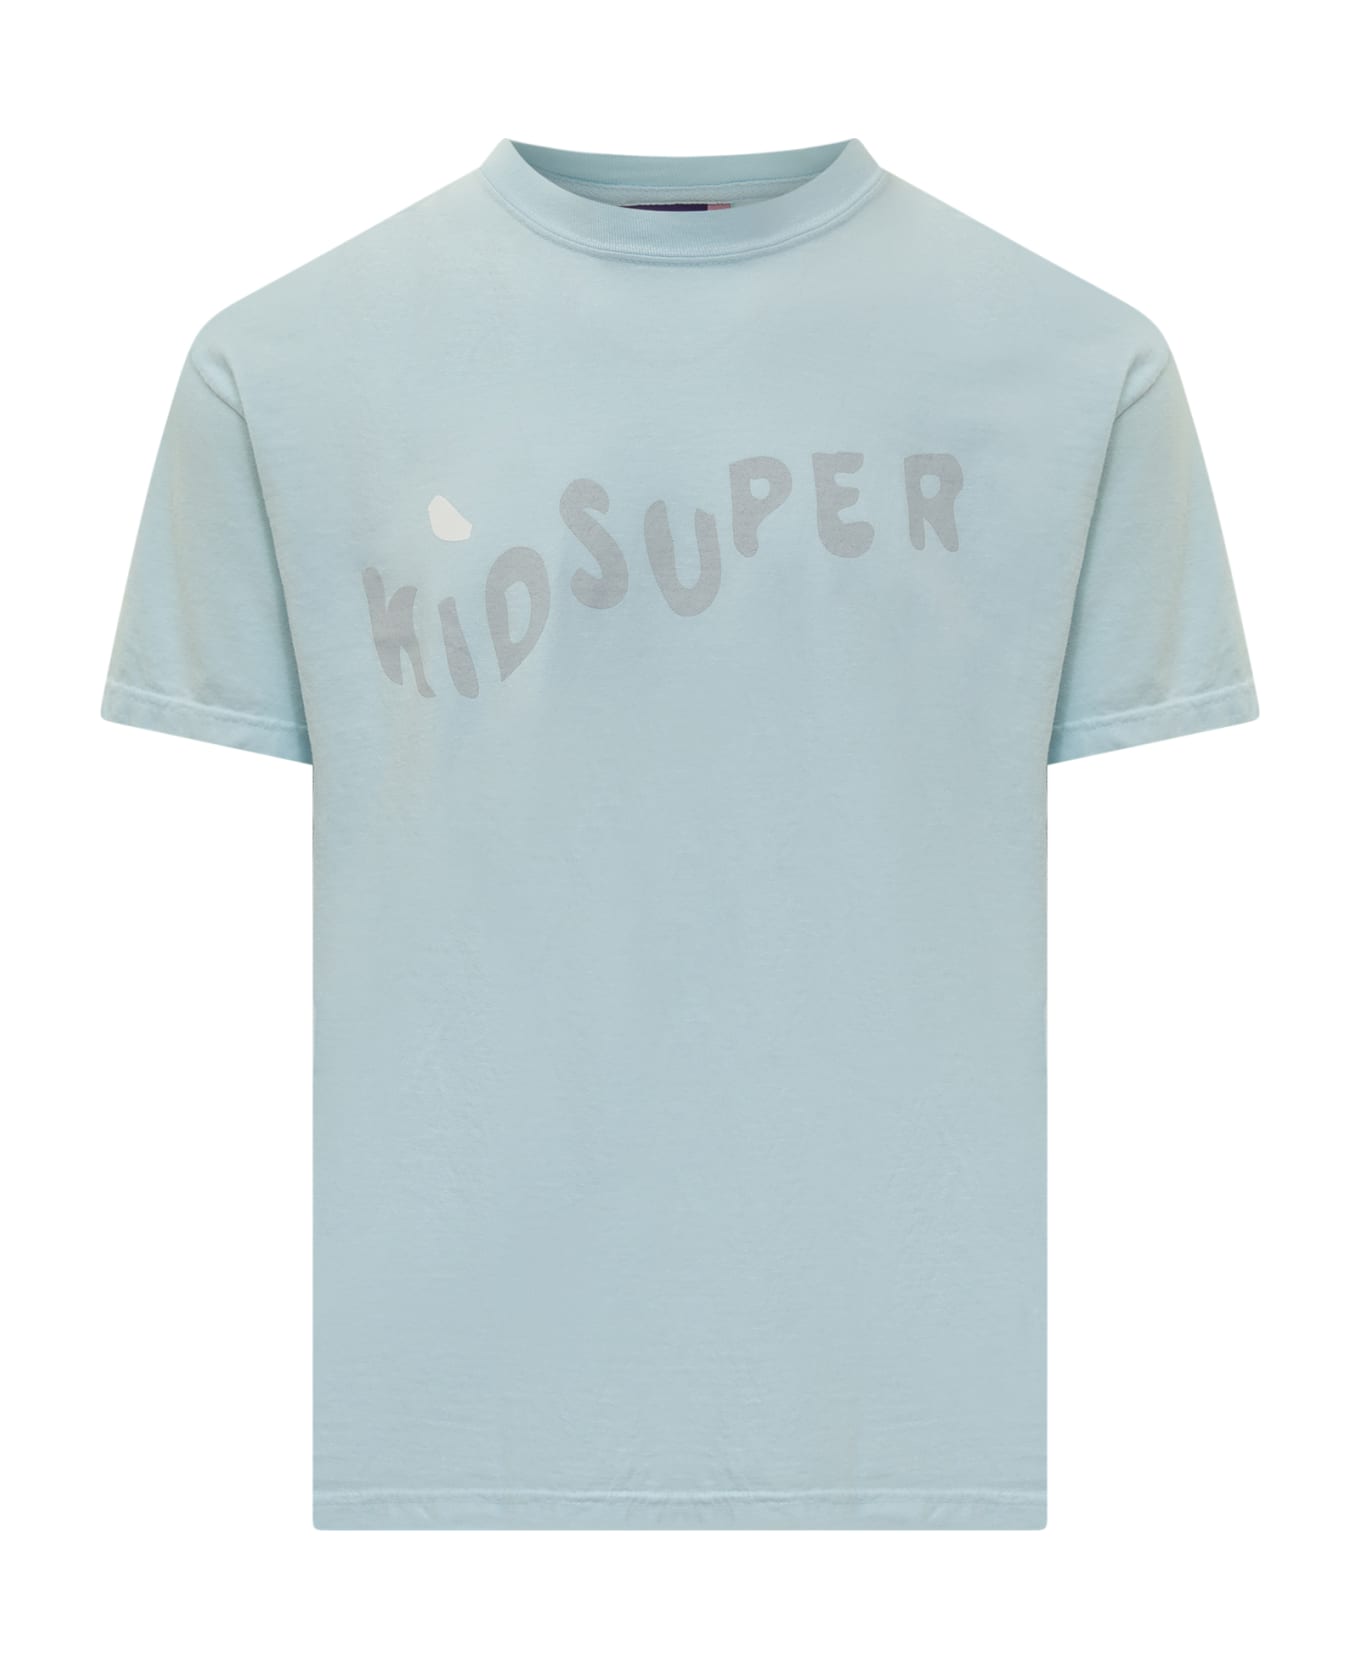 Kidsuper Wavey Logo T-shirt - MULTICOLOR Tシャツ